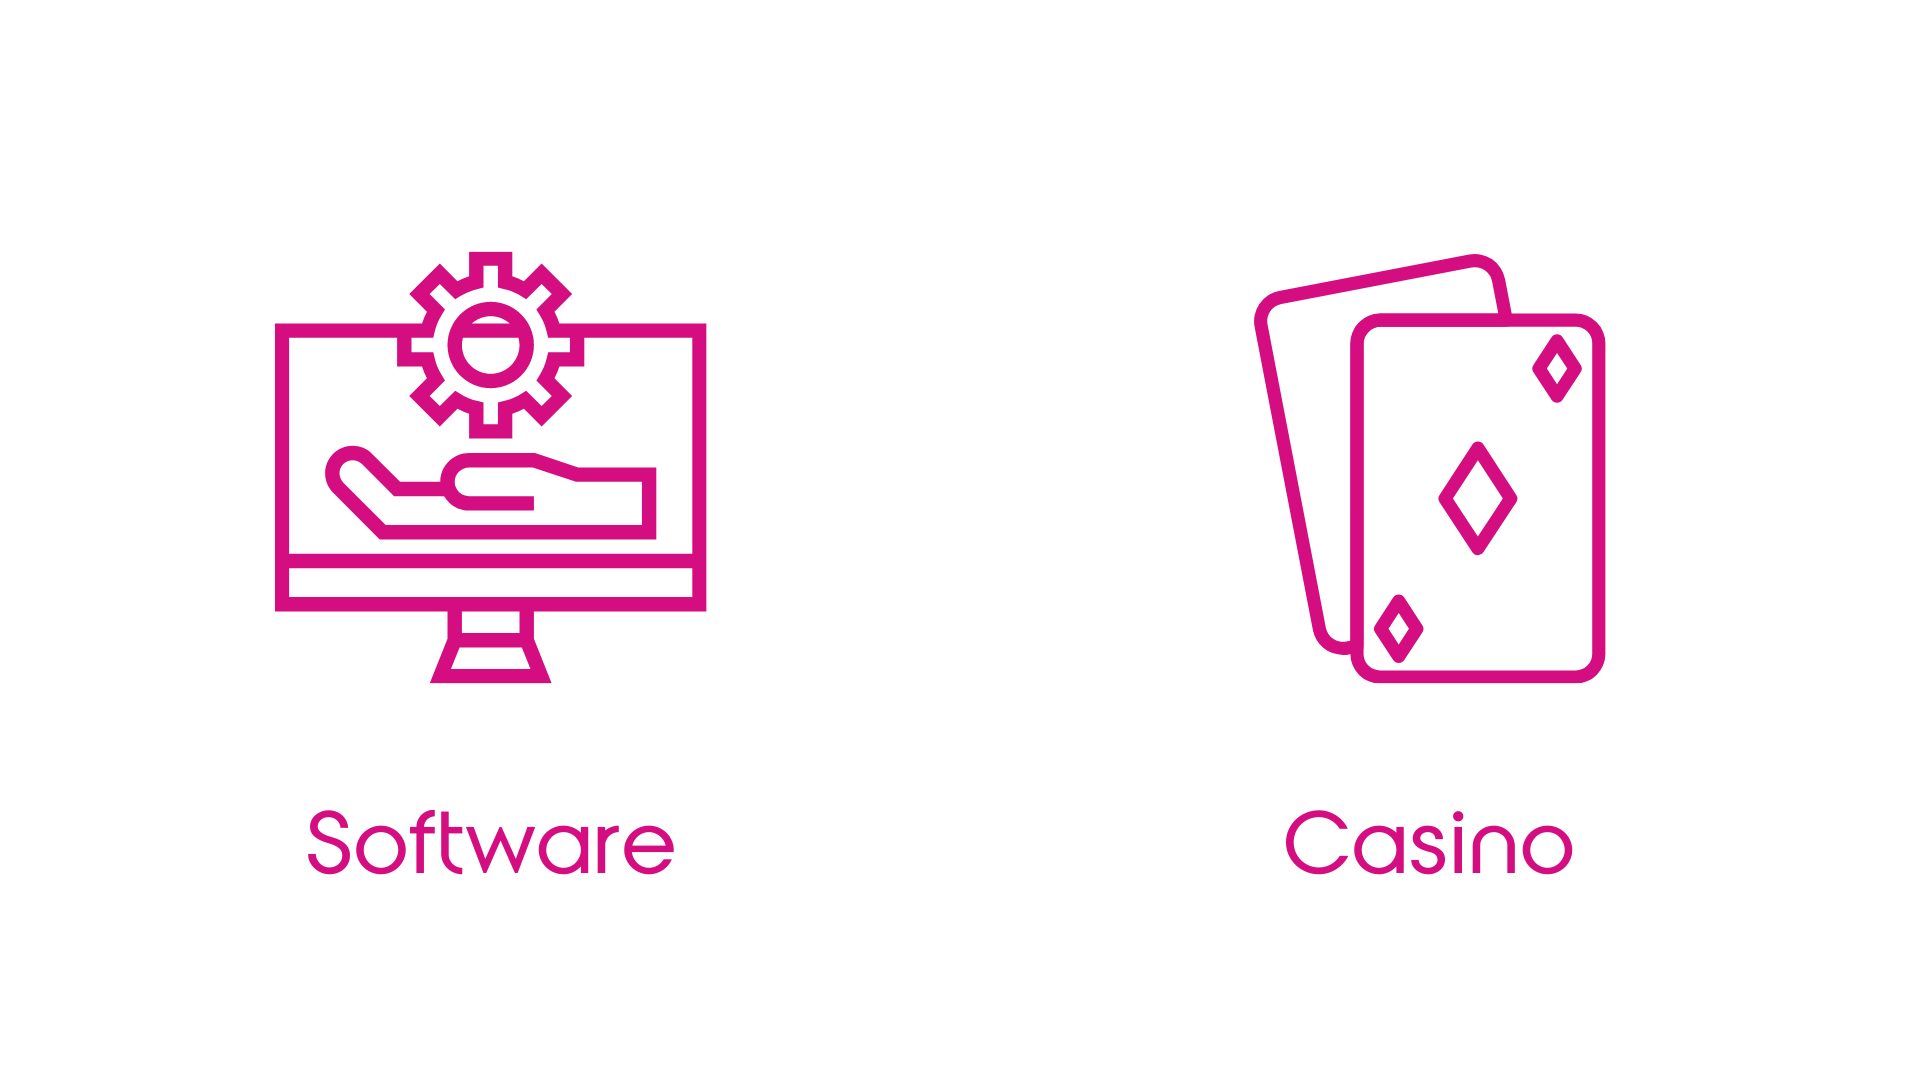 Software Company that Creates Gambling Software like Casino Games and Slots